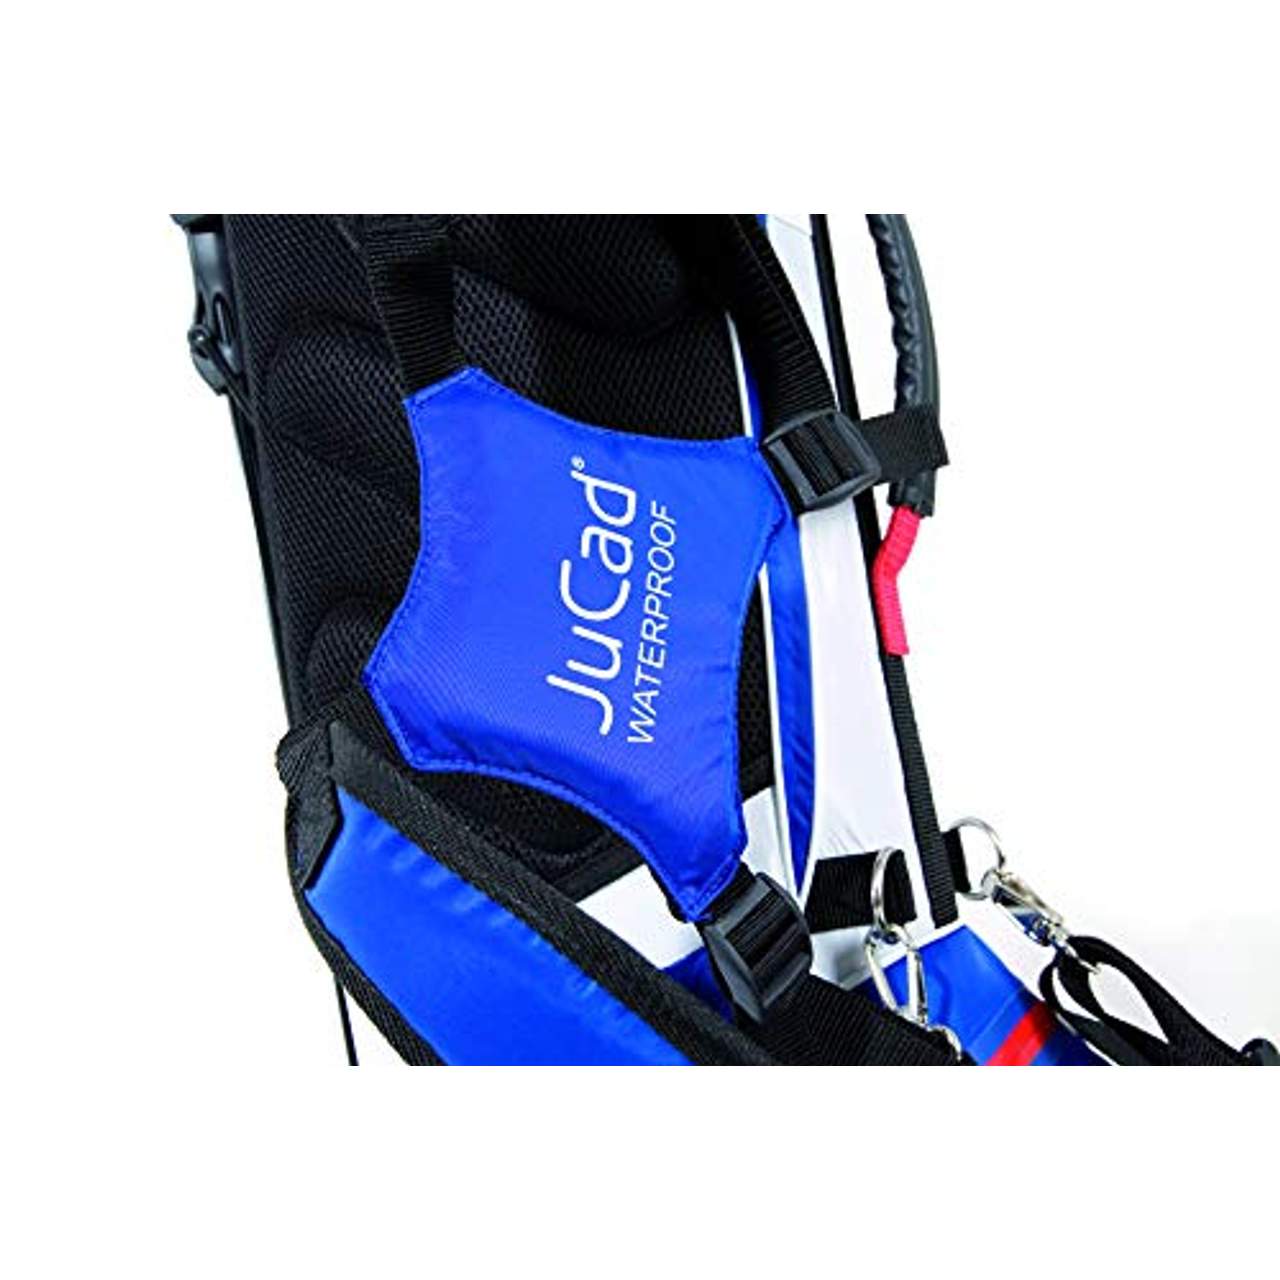 JuCad Bag 2 in 1 Waterproof I Wasserdicht I Tragebag I Cartbag I Golf I Tasche